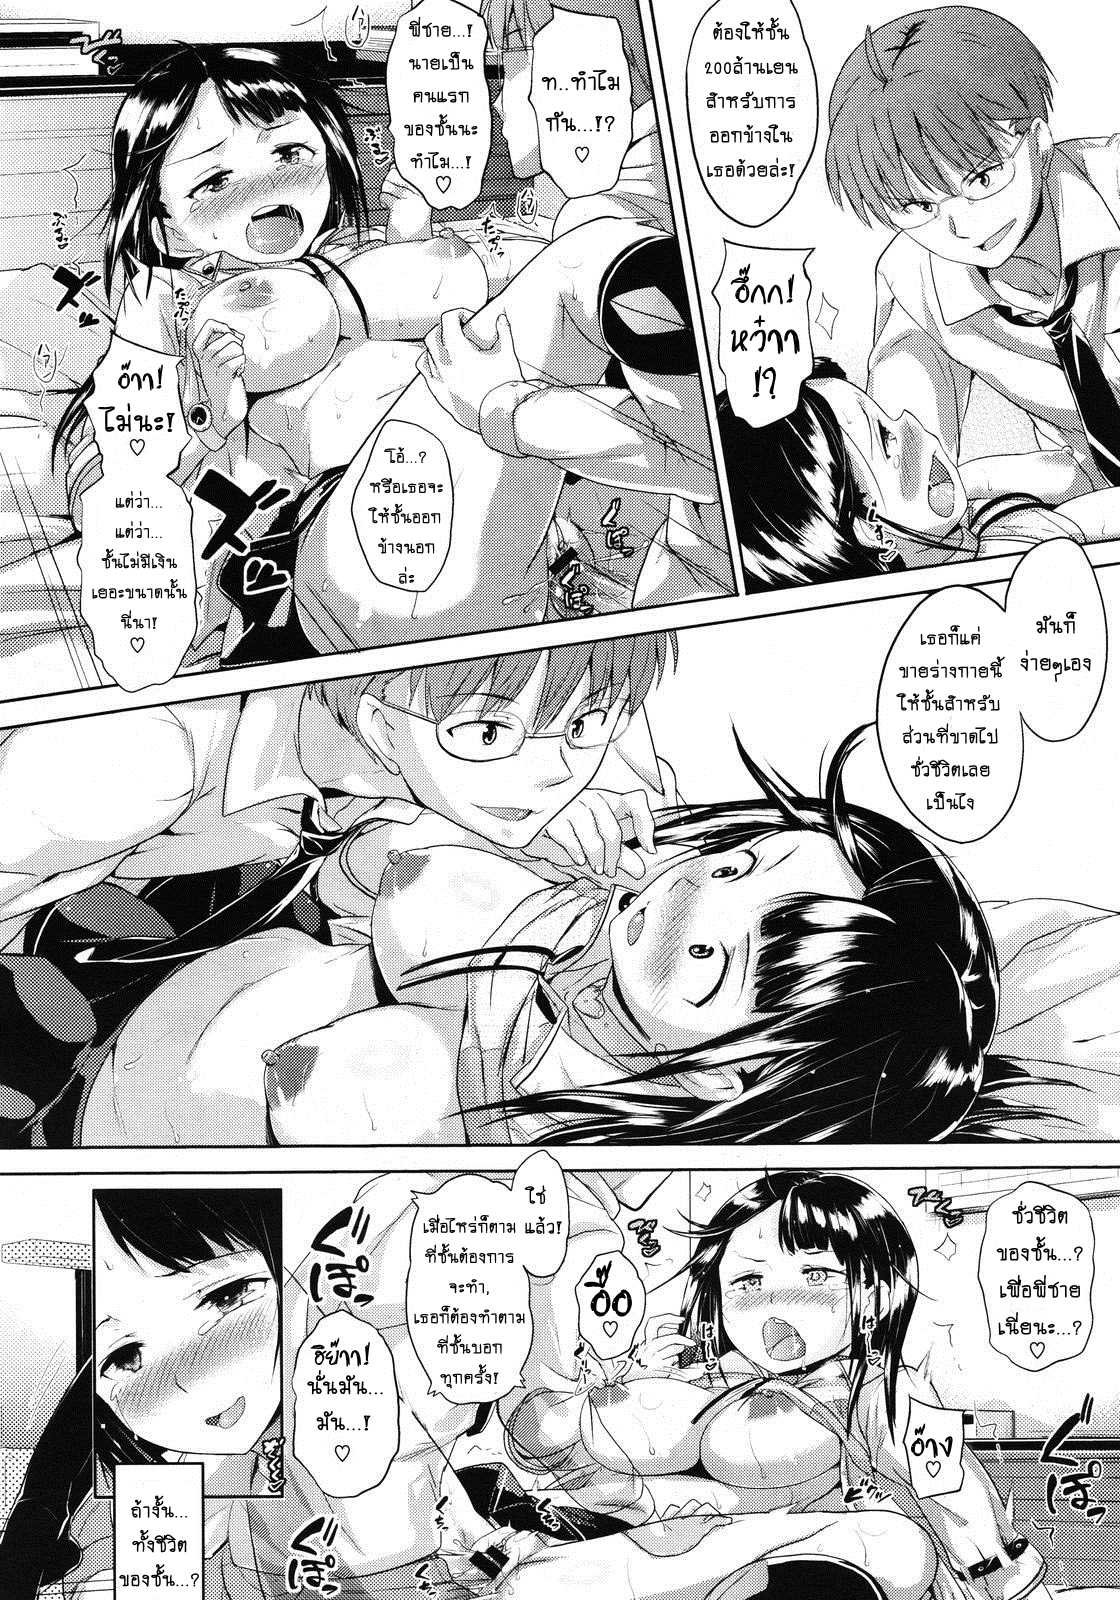 [Knuckle Curve] This Manga Is An Offer From Onii-Chan ไอ้พี่ชายลามก กับยัยน้องสาวขี้งก [Thai แปลไทย] By ZarK Kung 